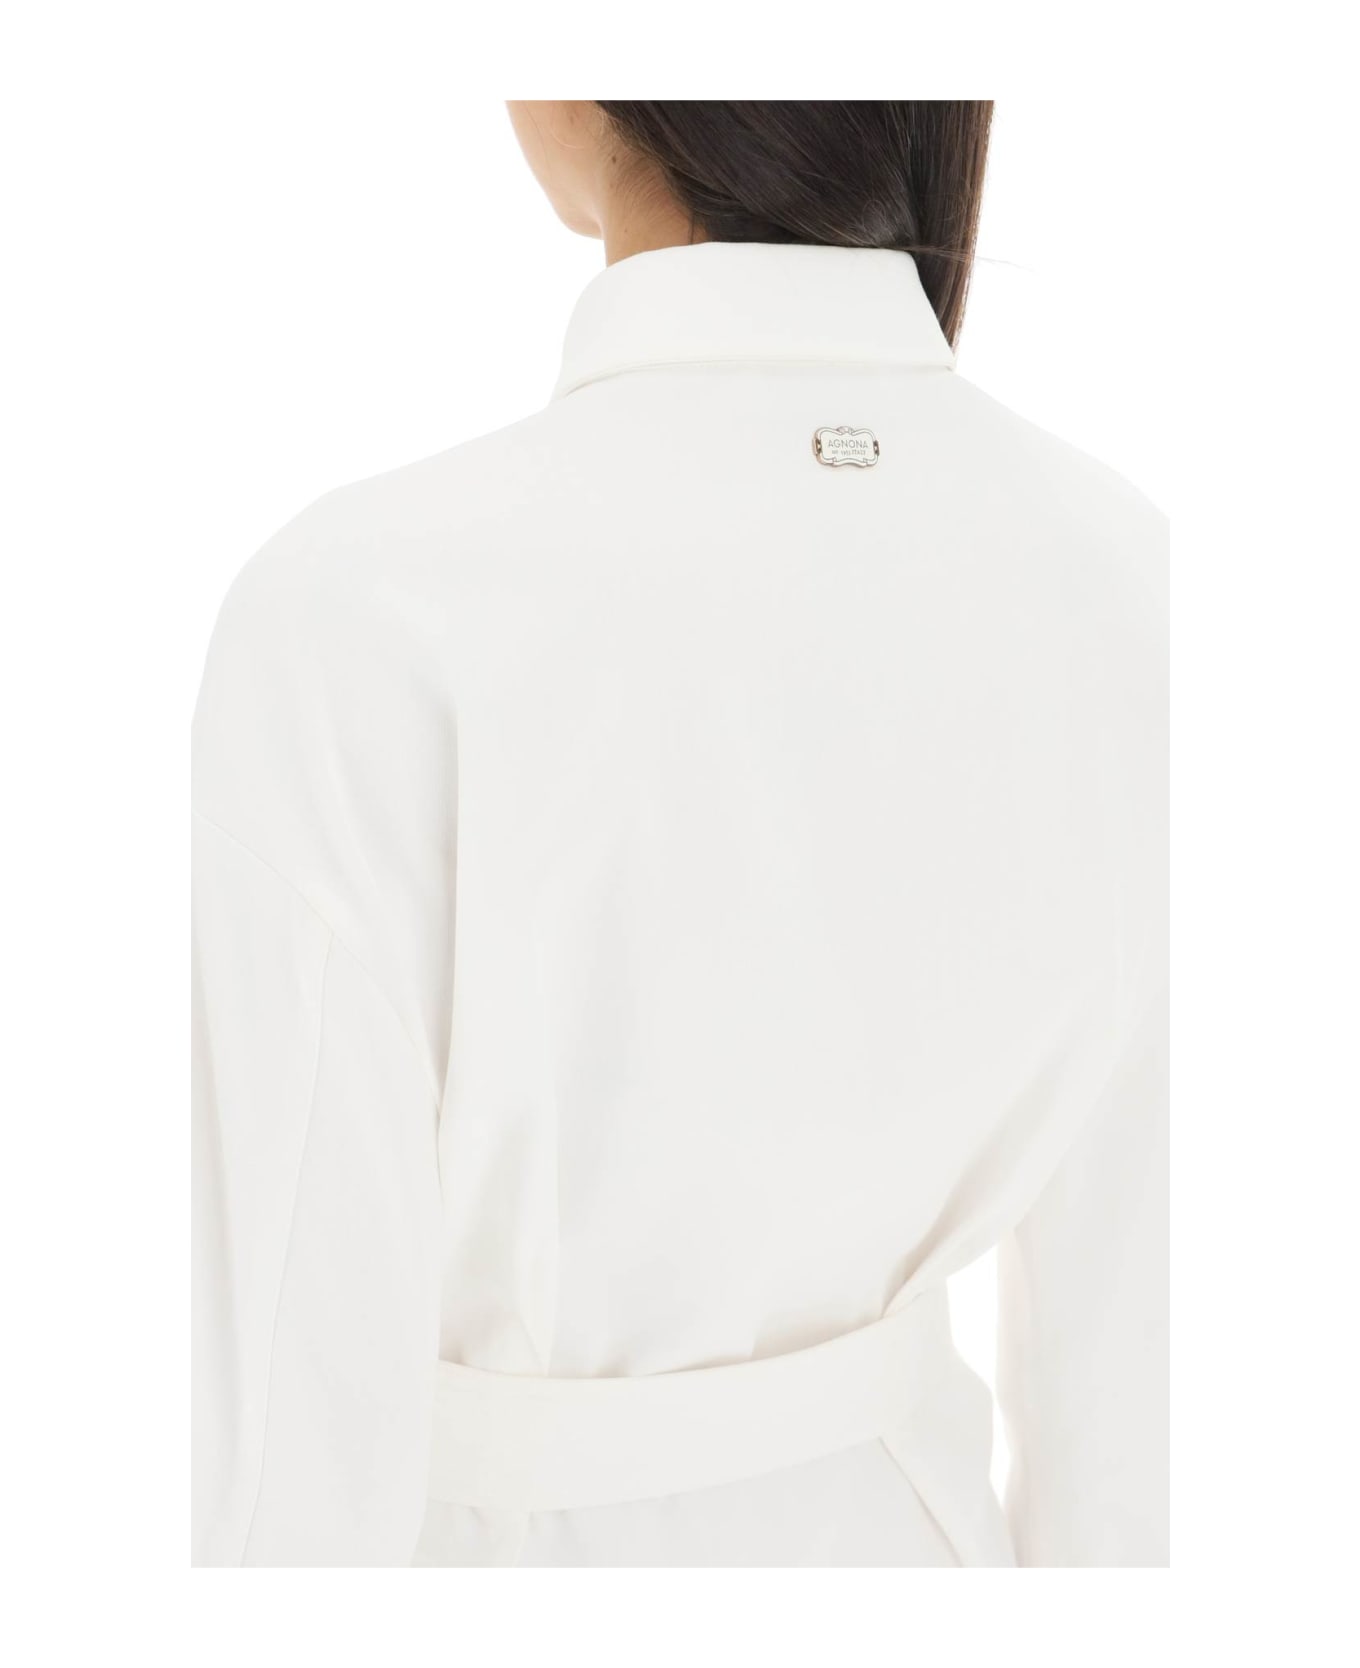 Agnona Belted Twill Shirt Dress - WHITE (White)